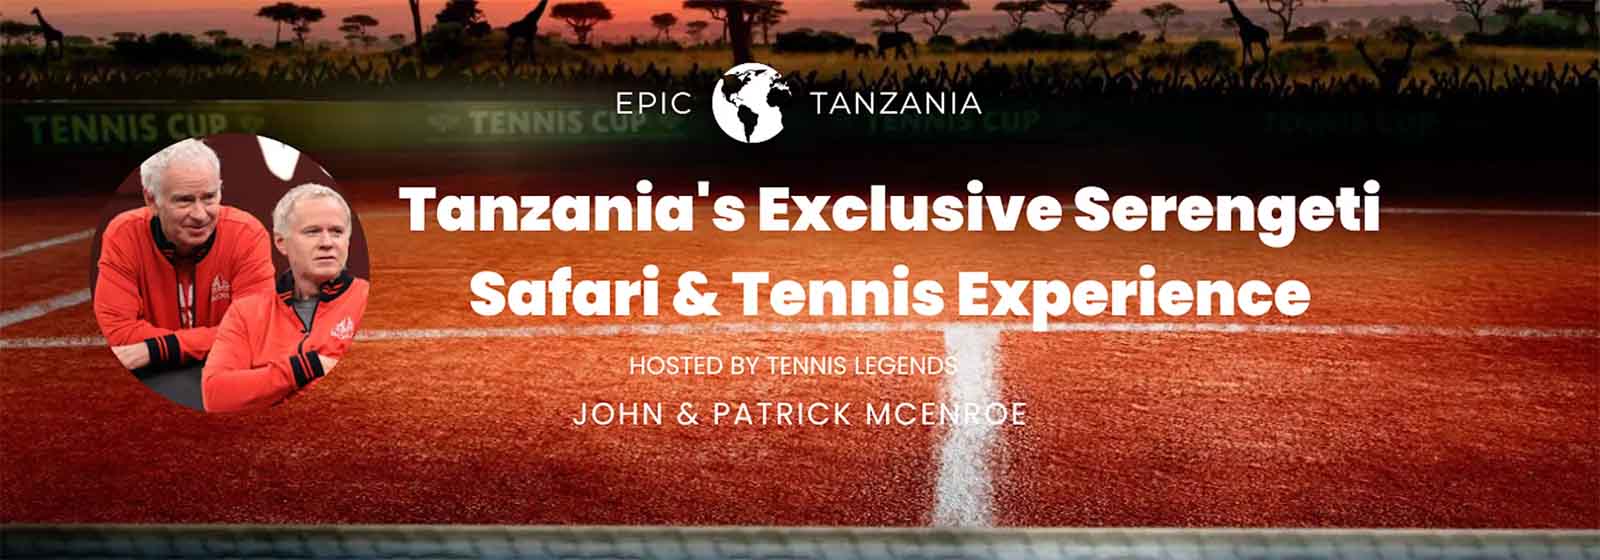 Epic Tanzania Tour website hero image featuring McEnroe brothers